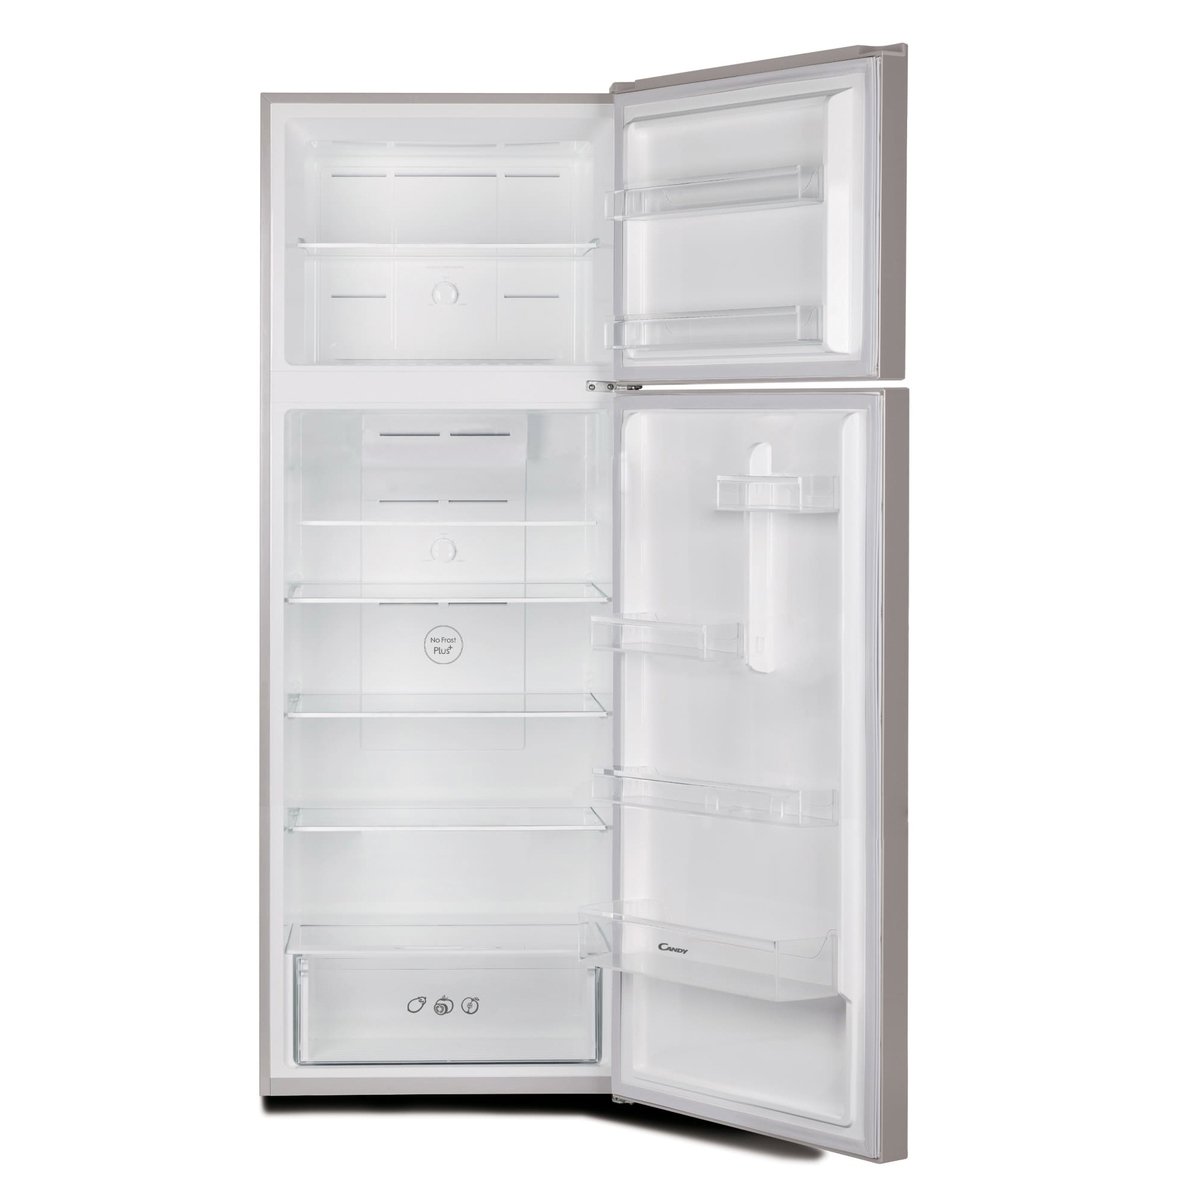 Candy Double Door Refrigerator CDDN620DSI-19 620LTR